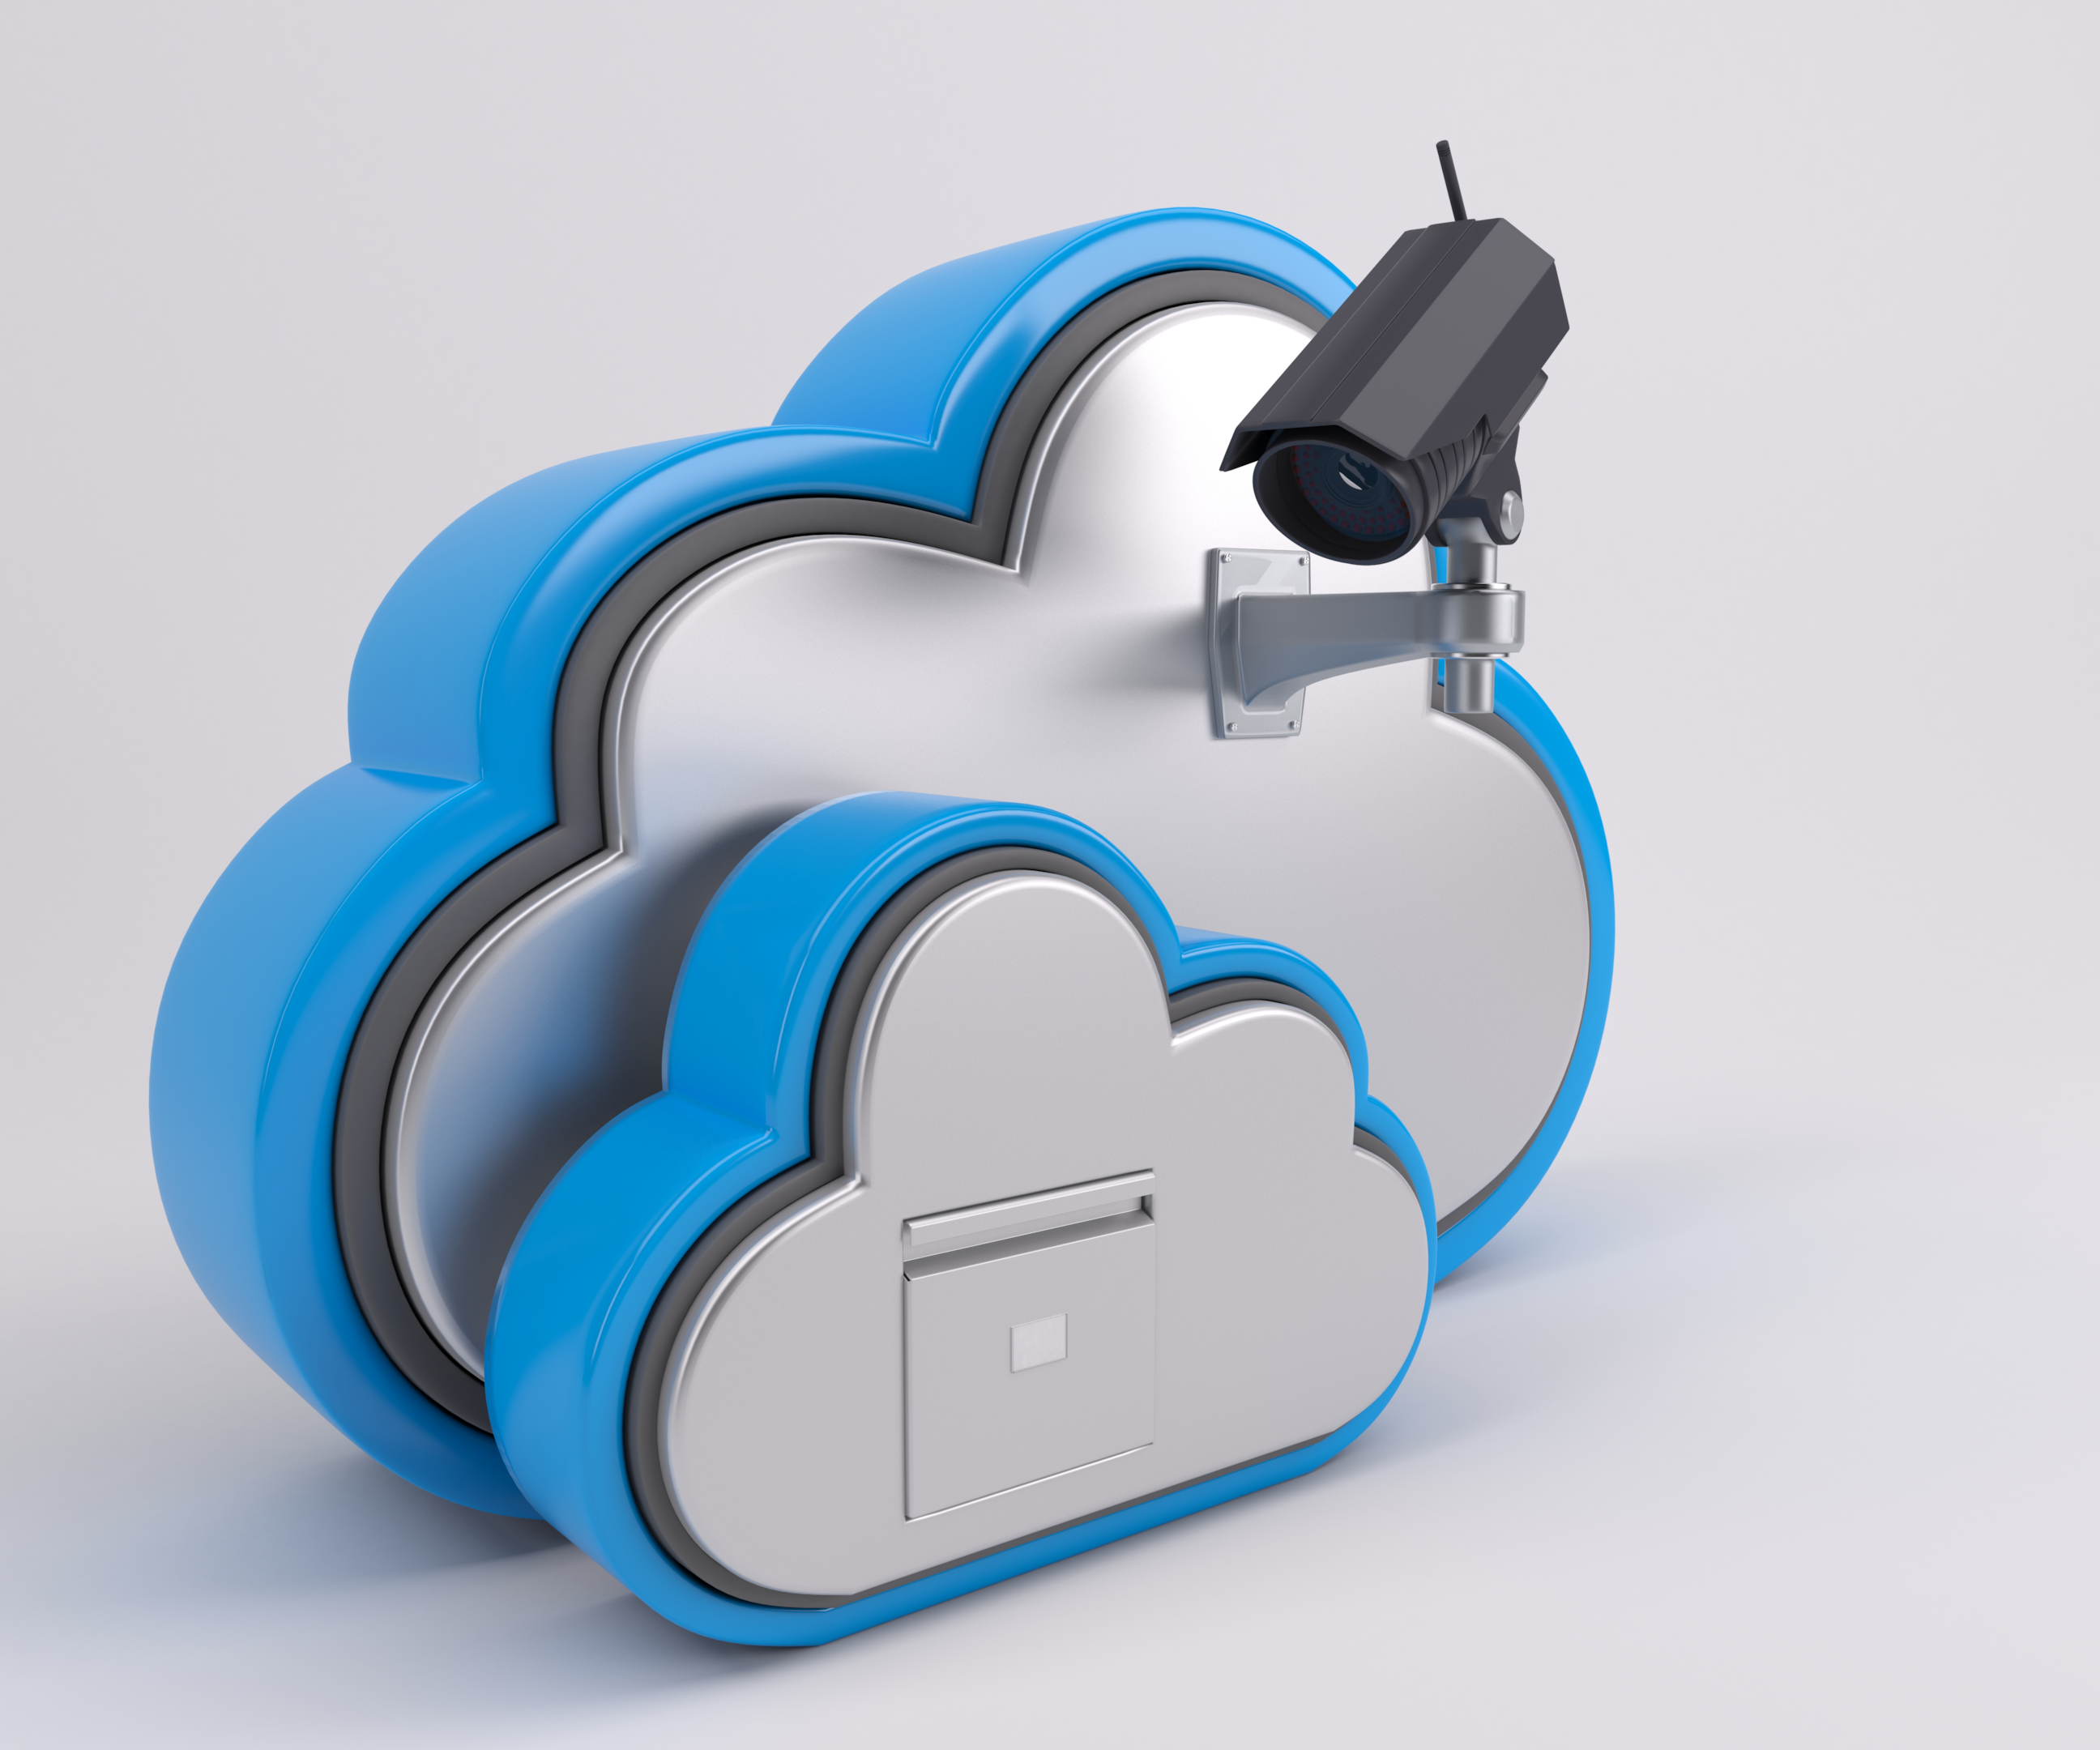 Metaphor-based illustration of cloud monitoring